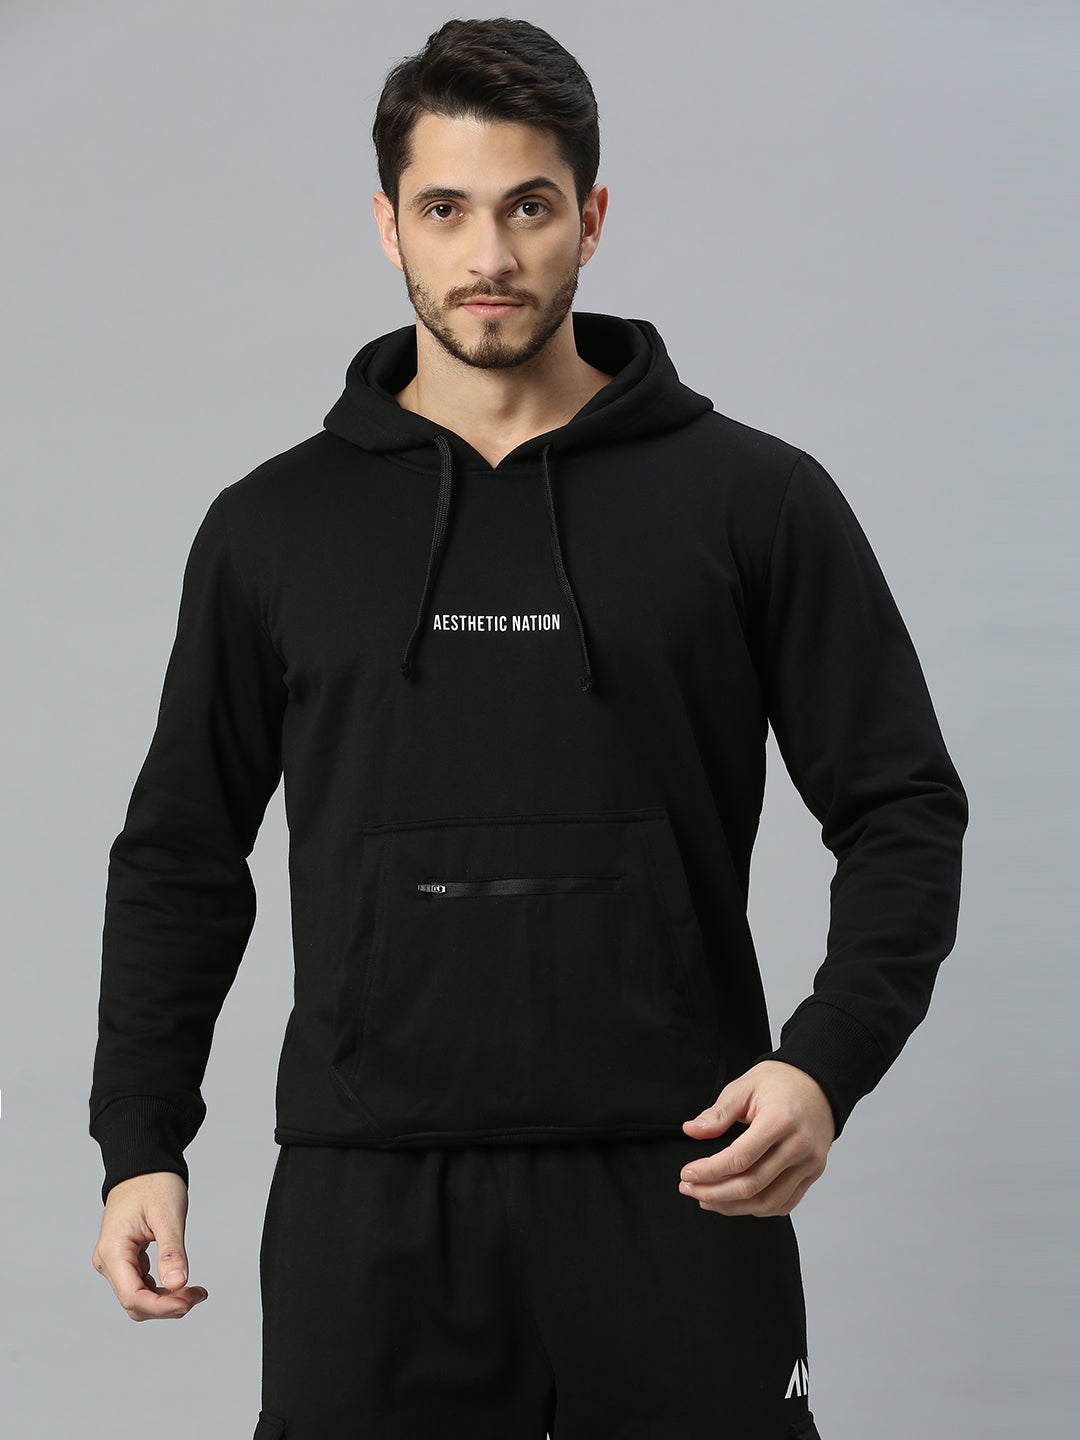 FEDTOSING Mens Gym Hoodie Workout Sweatshirt Muscle India